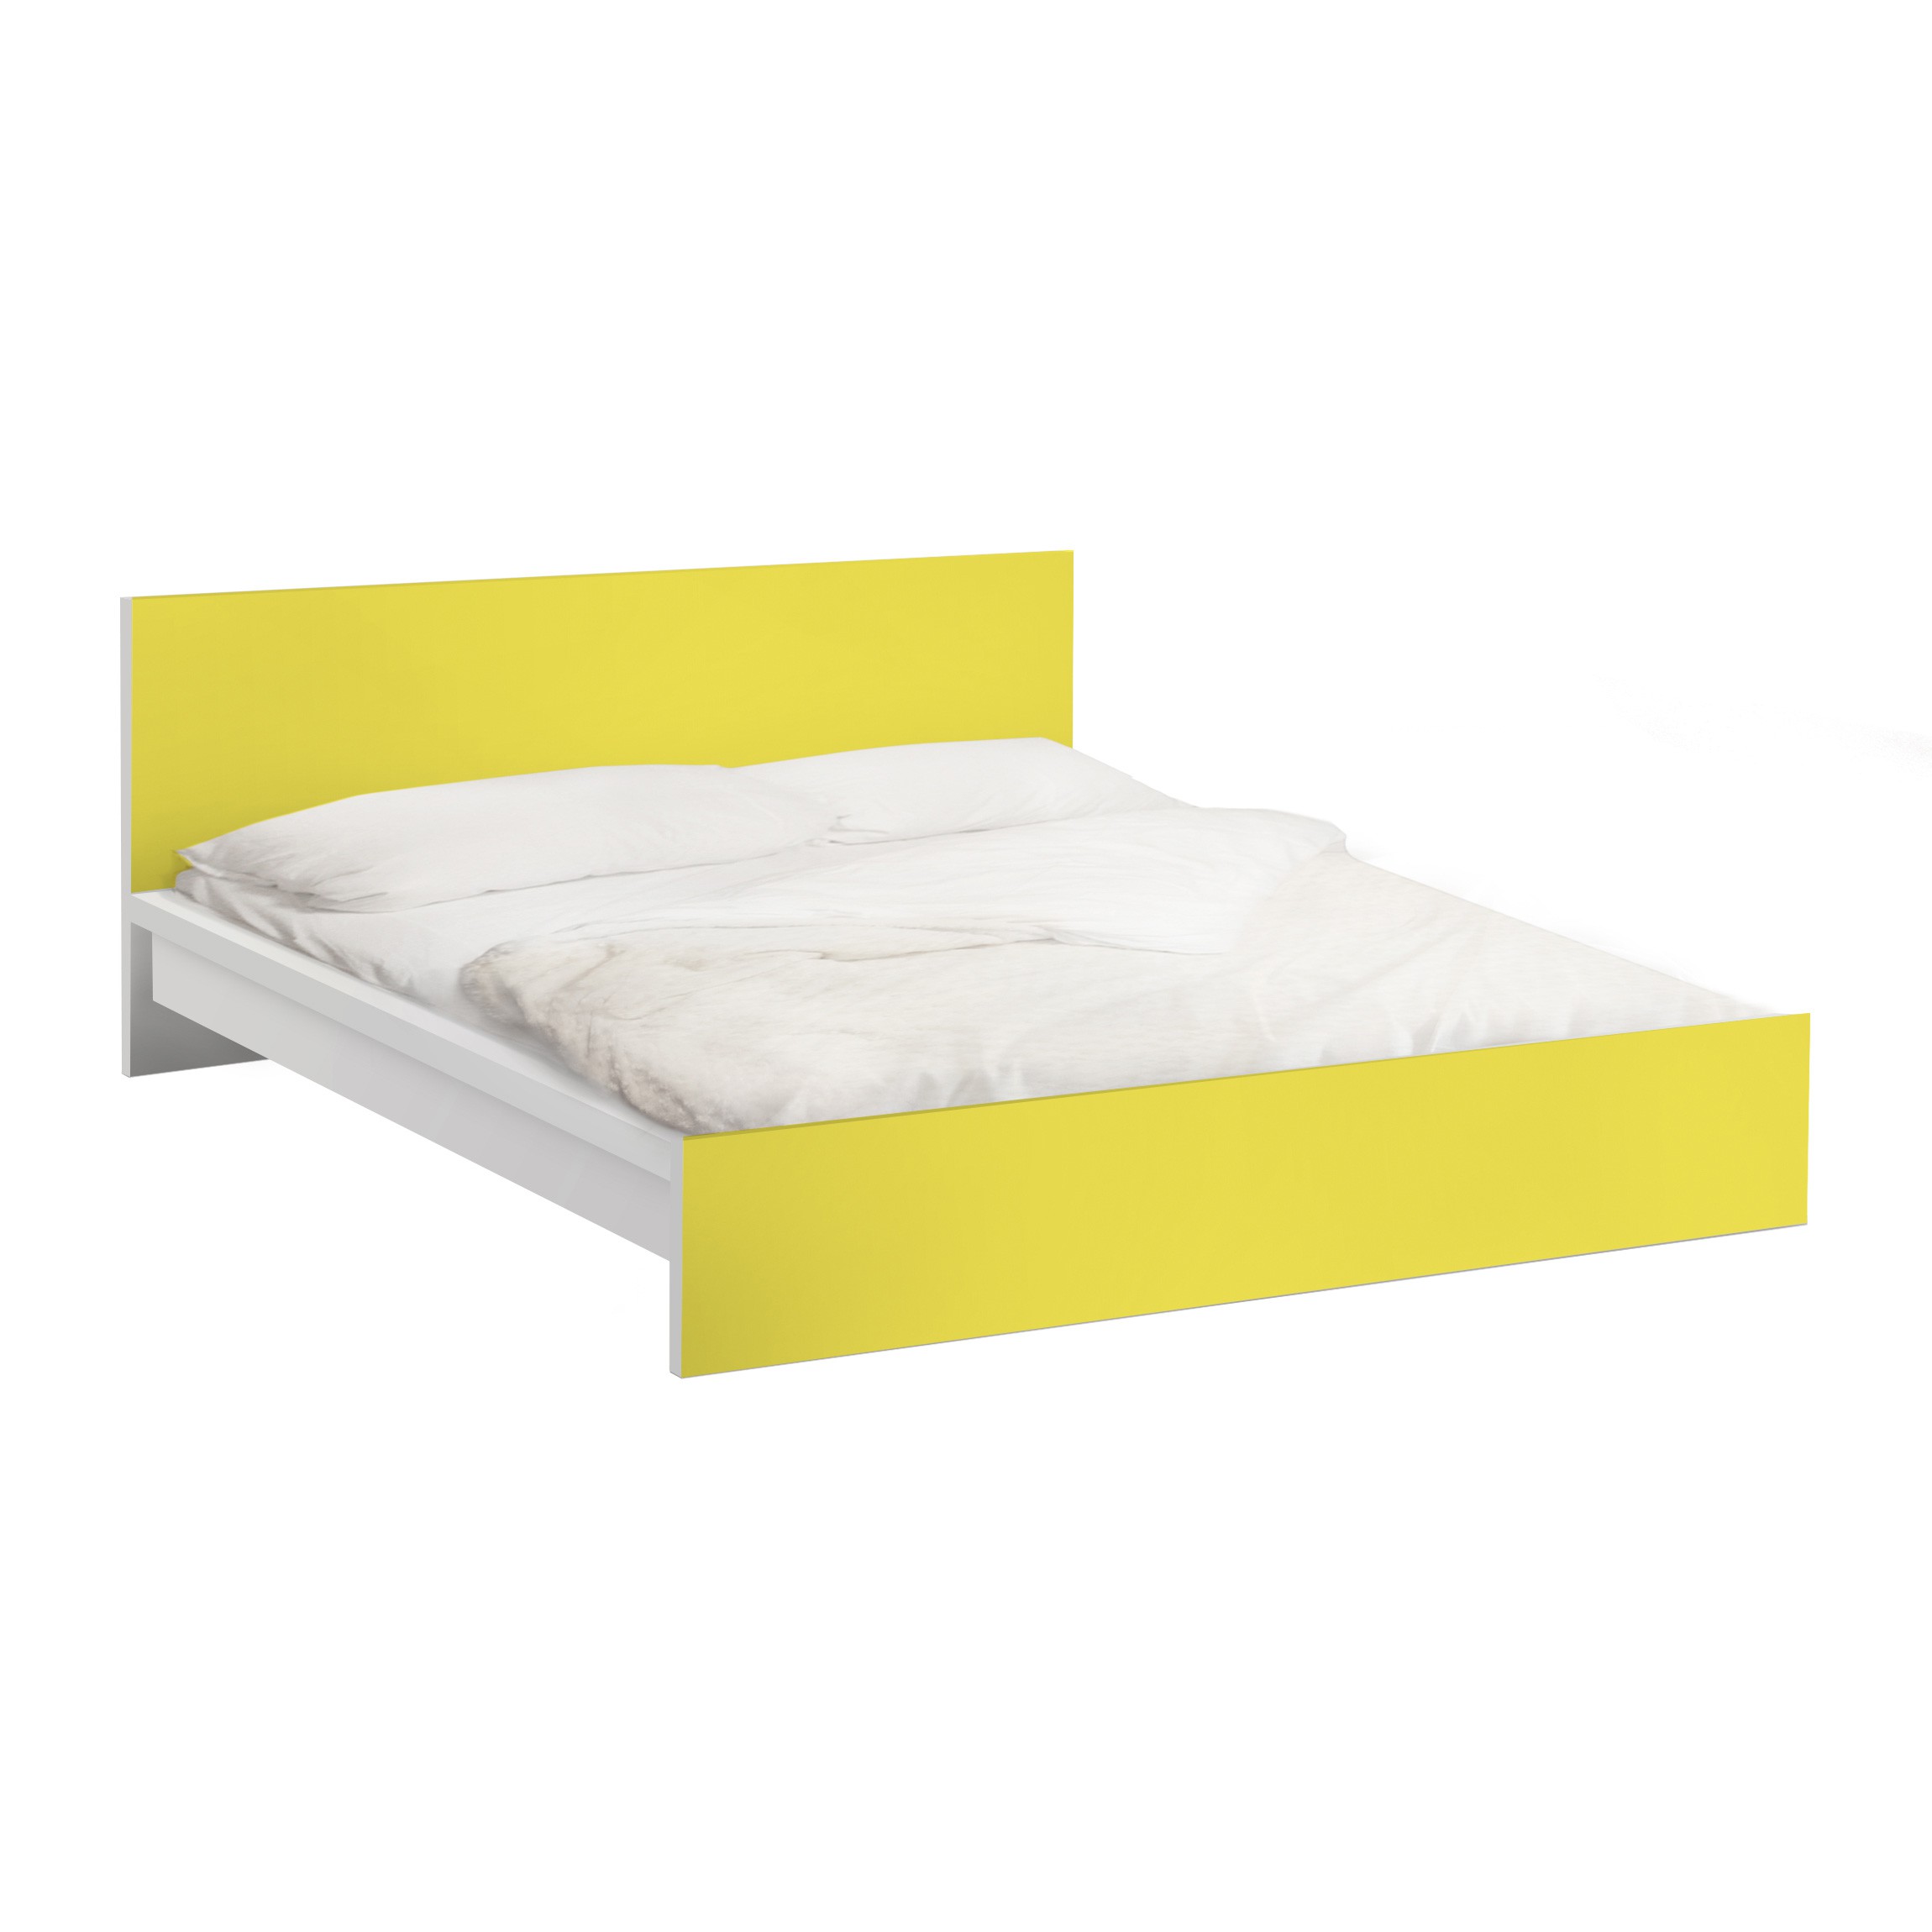 Möbelfolie für IKEA Malm Bett 140 cm Breite Colour Lemon Yellow